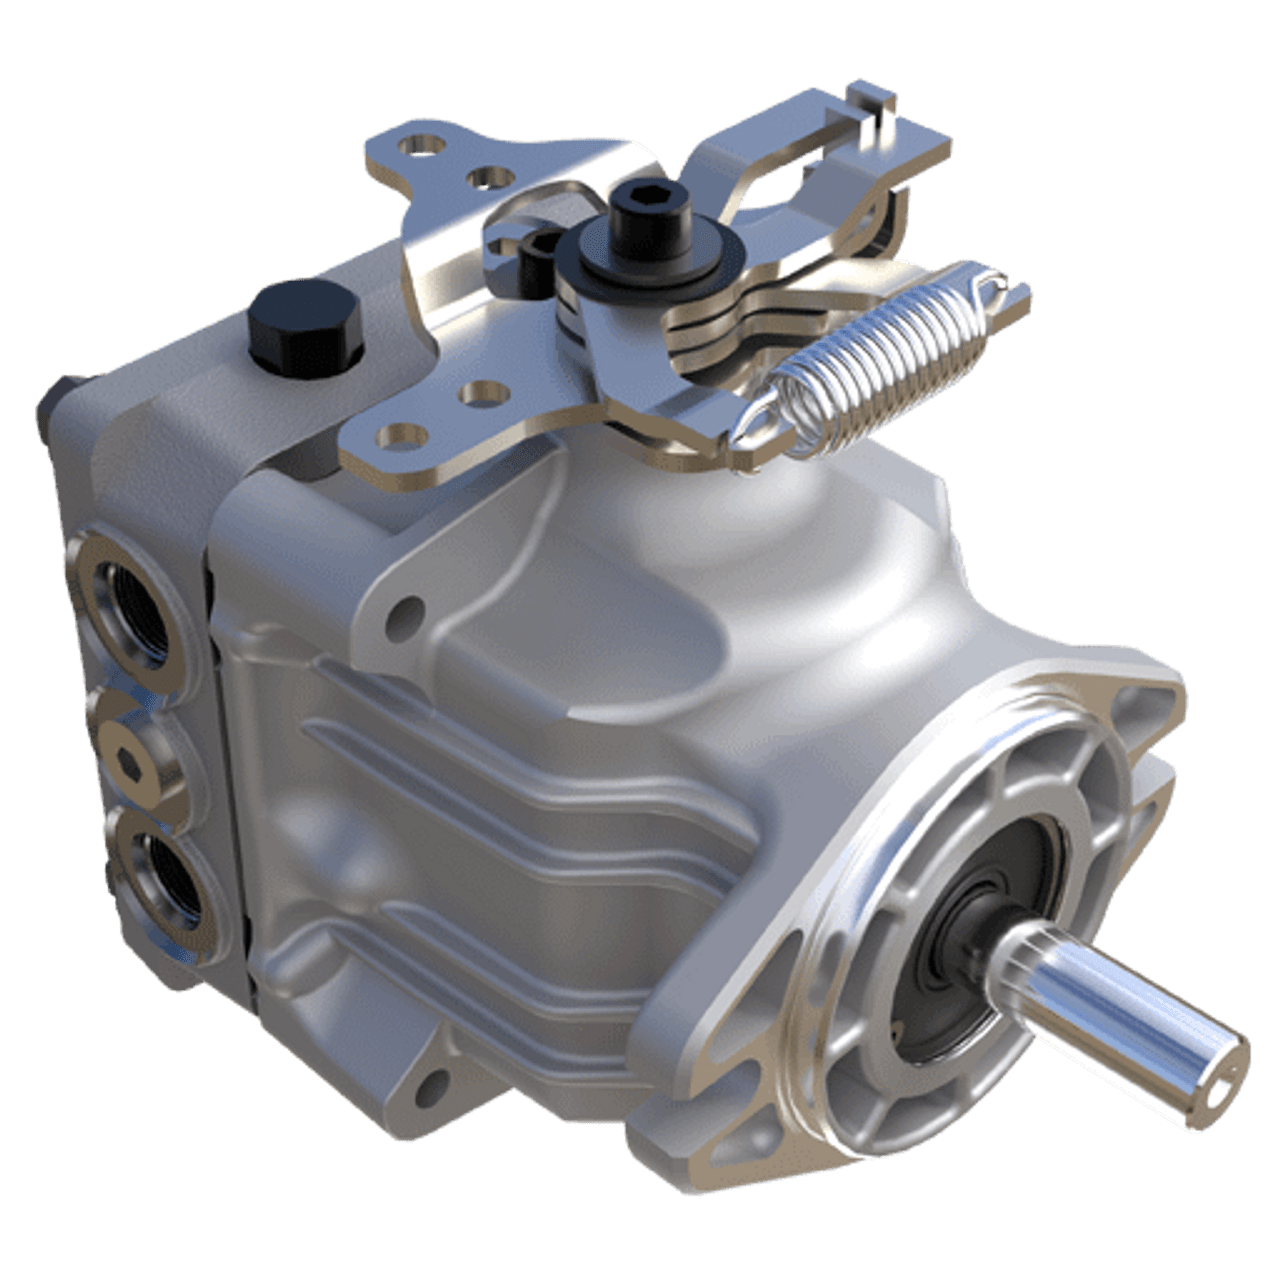 Hydro Gear PG-1HCC-DY1X-XXXX Hydraulic Pump P Series | Original OEM Part | Free Shipping - LawnMowerPartsWorld.com